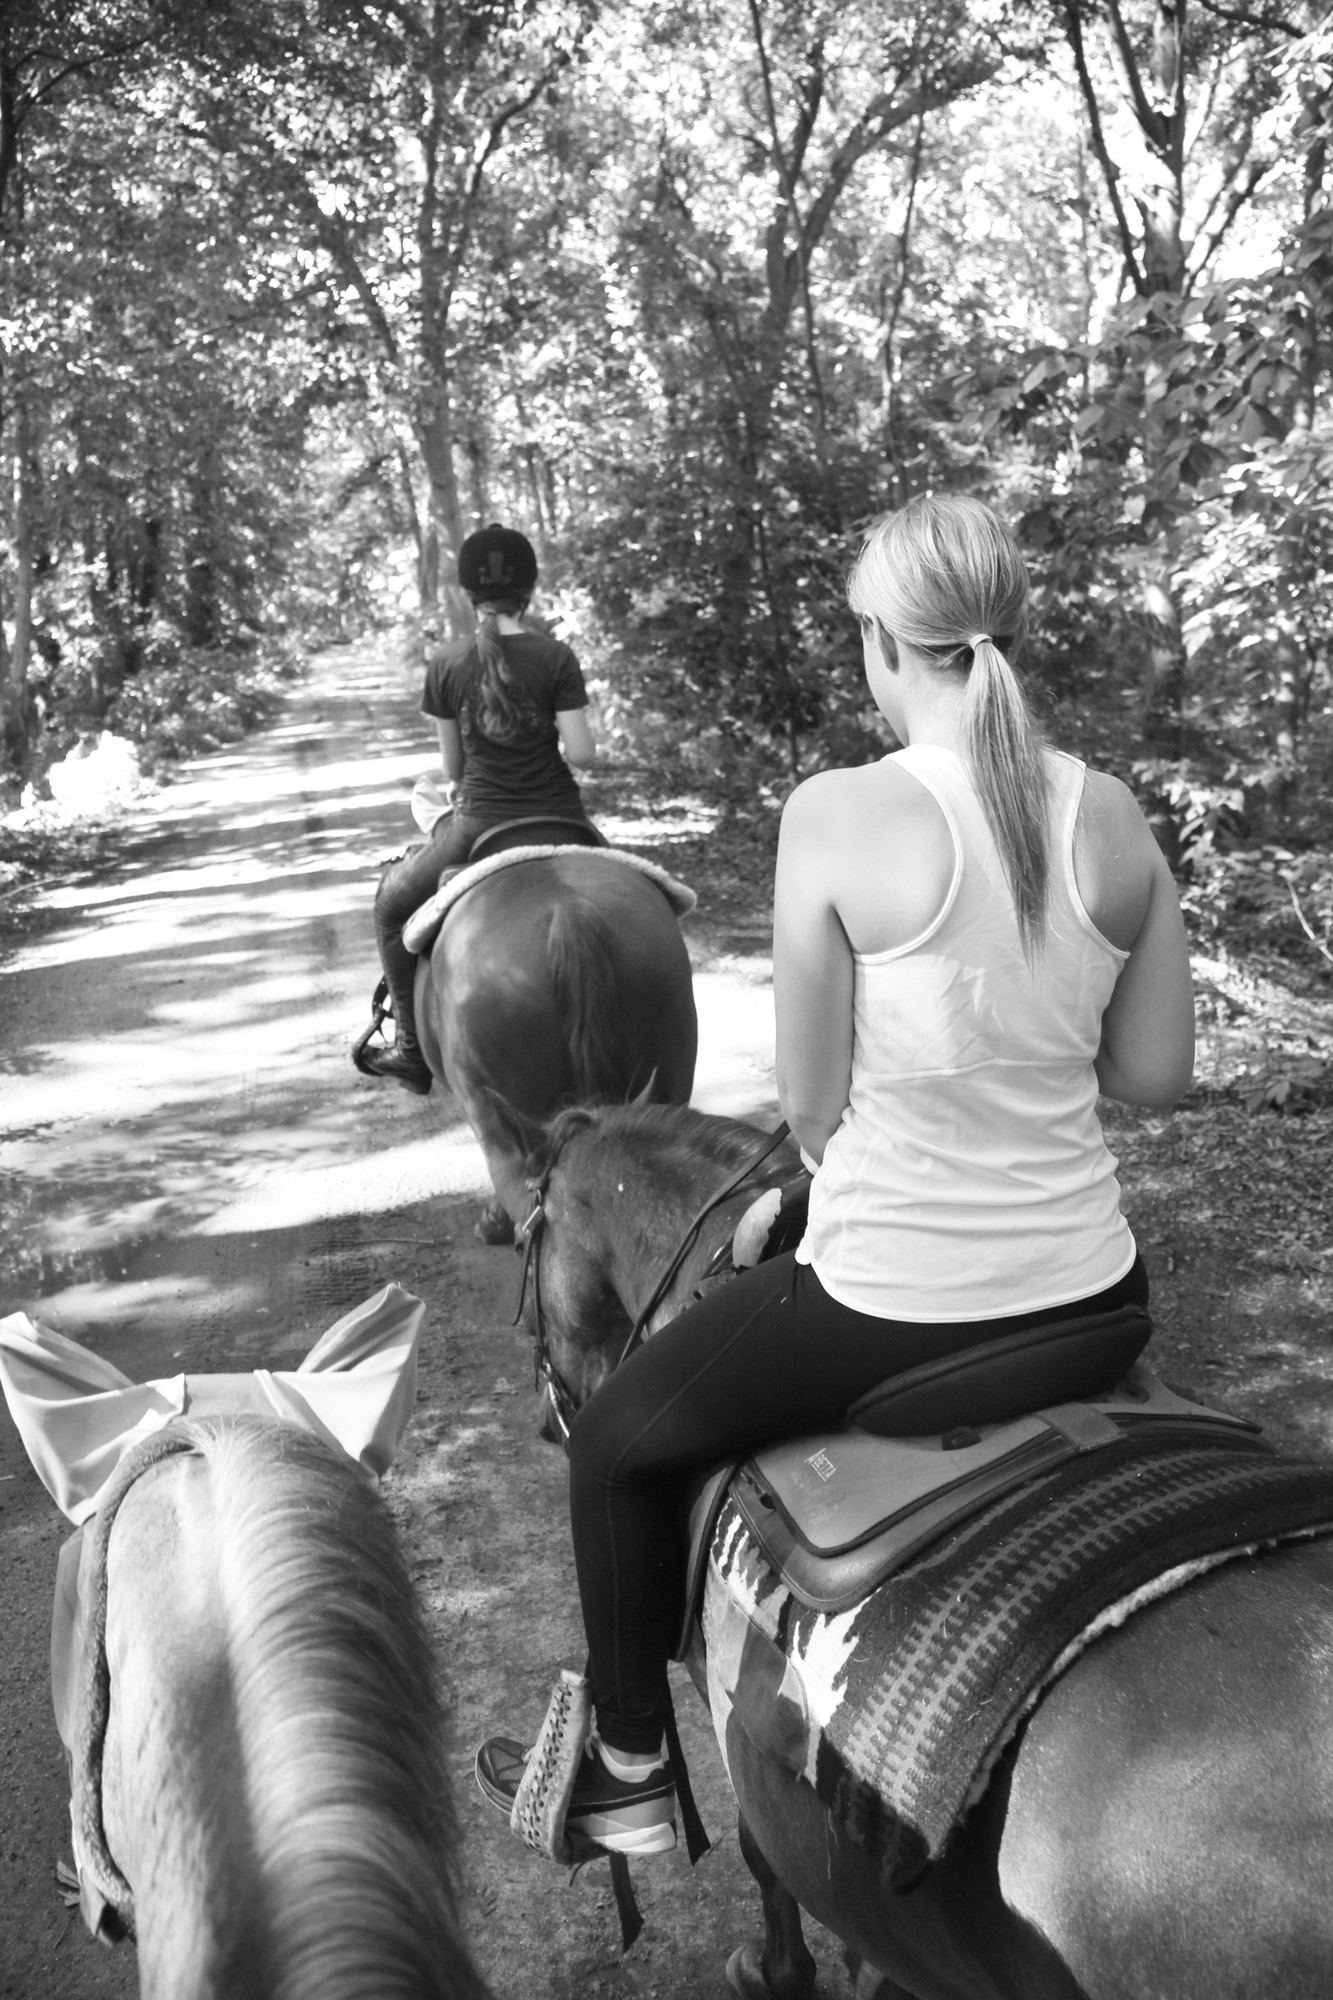 Alina Semenove, of the New York Equestrian Center, led Herald intern Amanda McKelvey on the bridal trail at Hempstead Lake State Park.